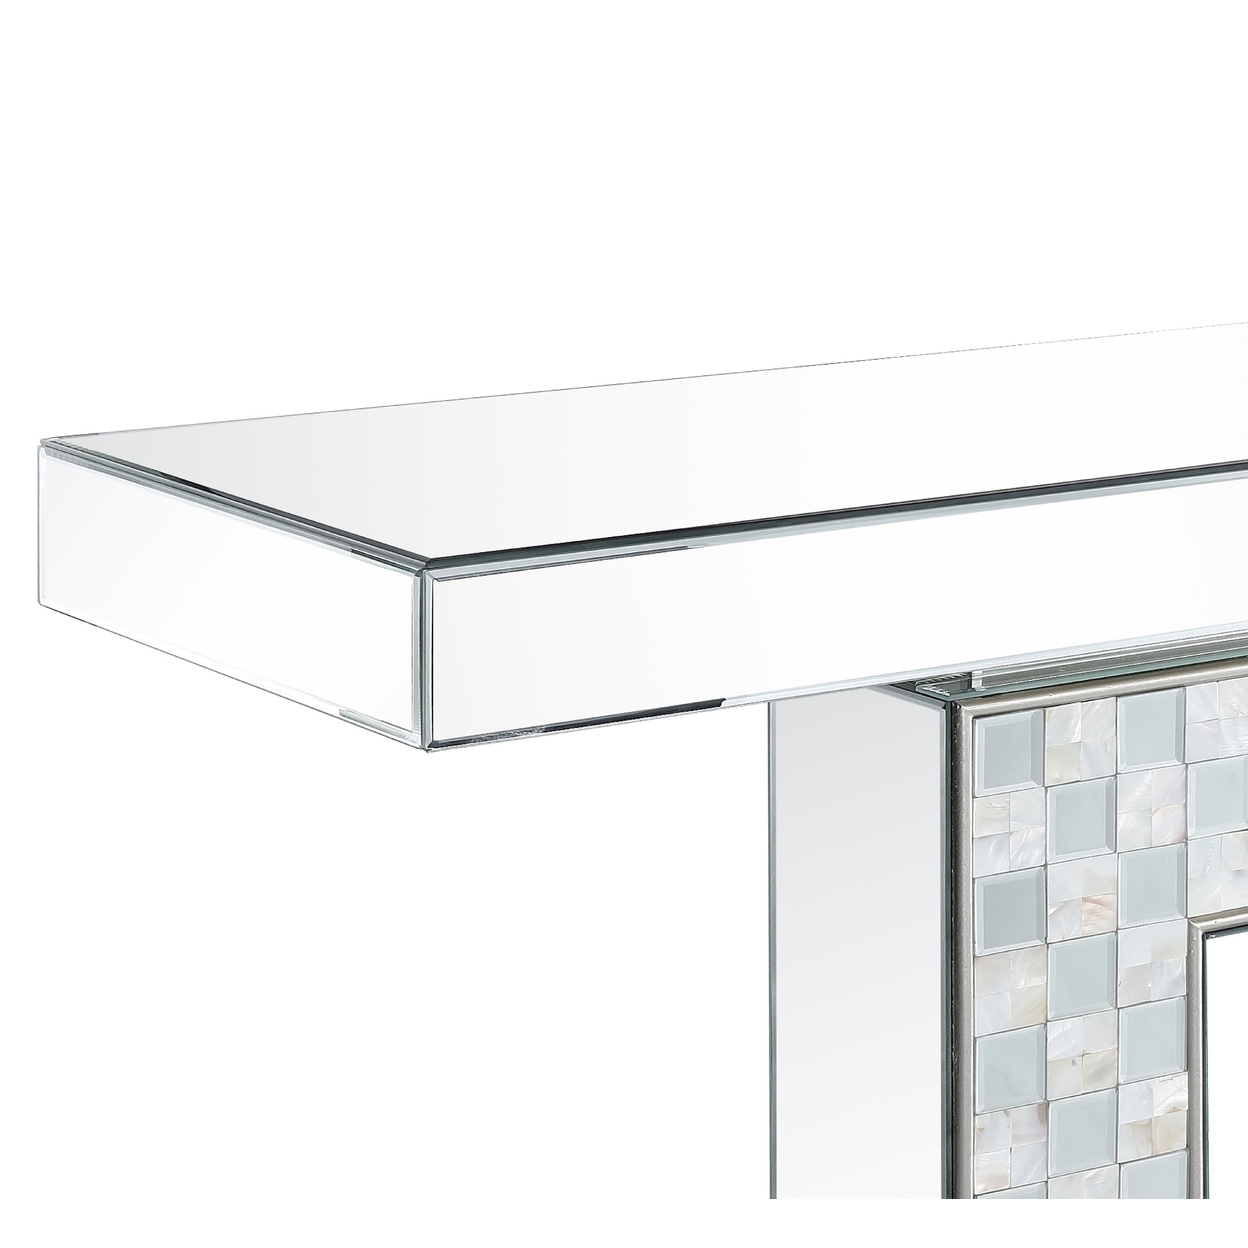 Contemporary Style Mirror Console Table With Square Base Design, Silver- Saltoro Sherpi